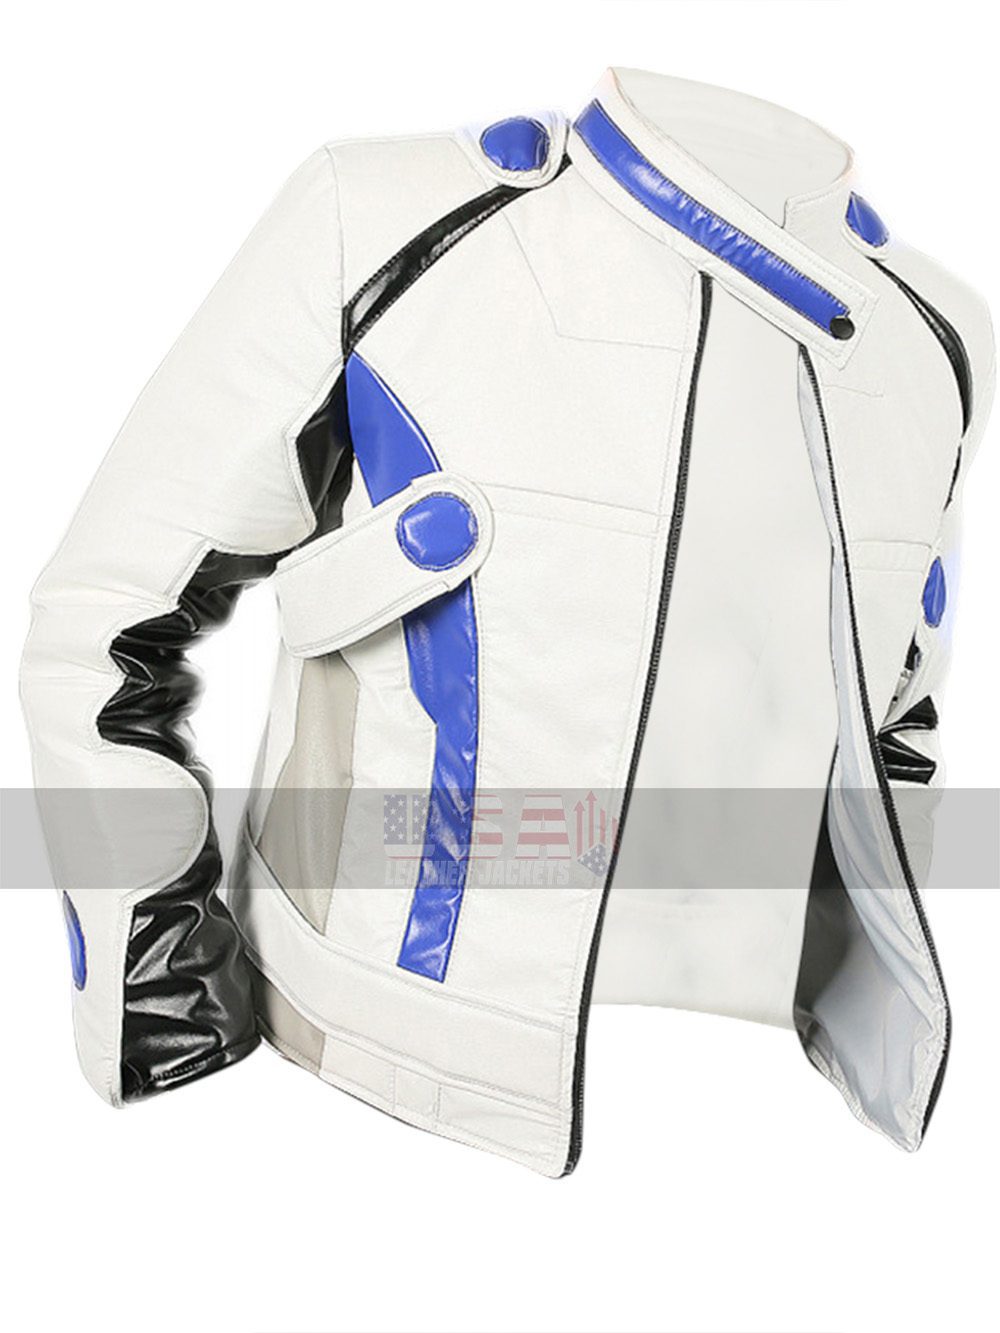 Mass Effect Andromeda Liam Kosta Costume Leather Jacket